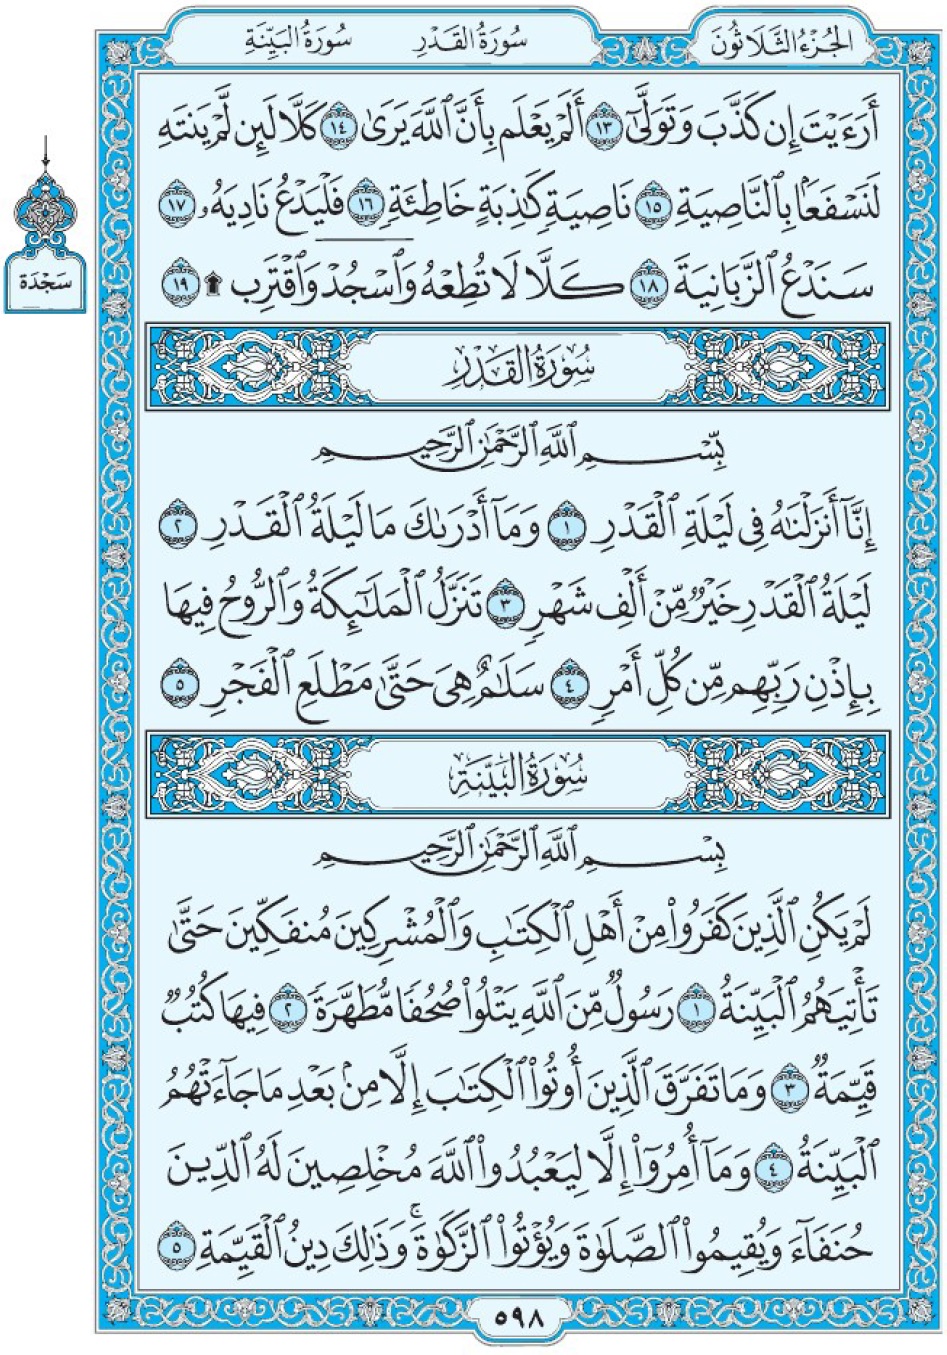 Коран Мединский мусхаф страница 598, сура 97 аль-Кадр, 98 аль-Баййина, سورة القدر البينة 